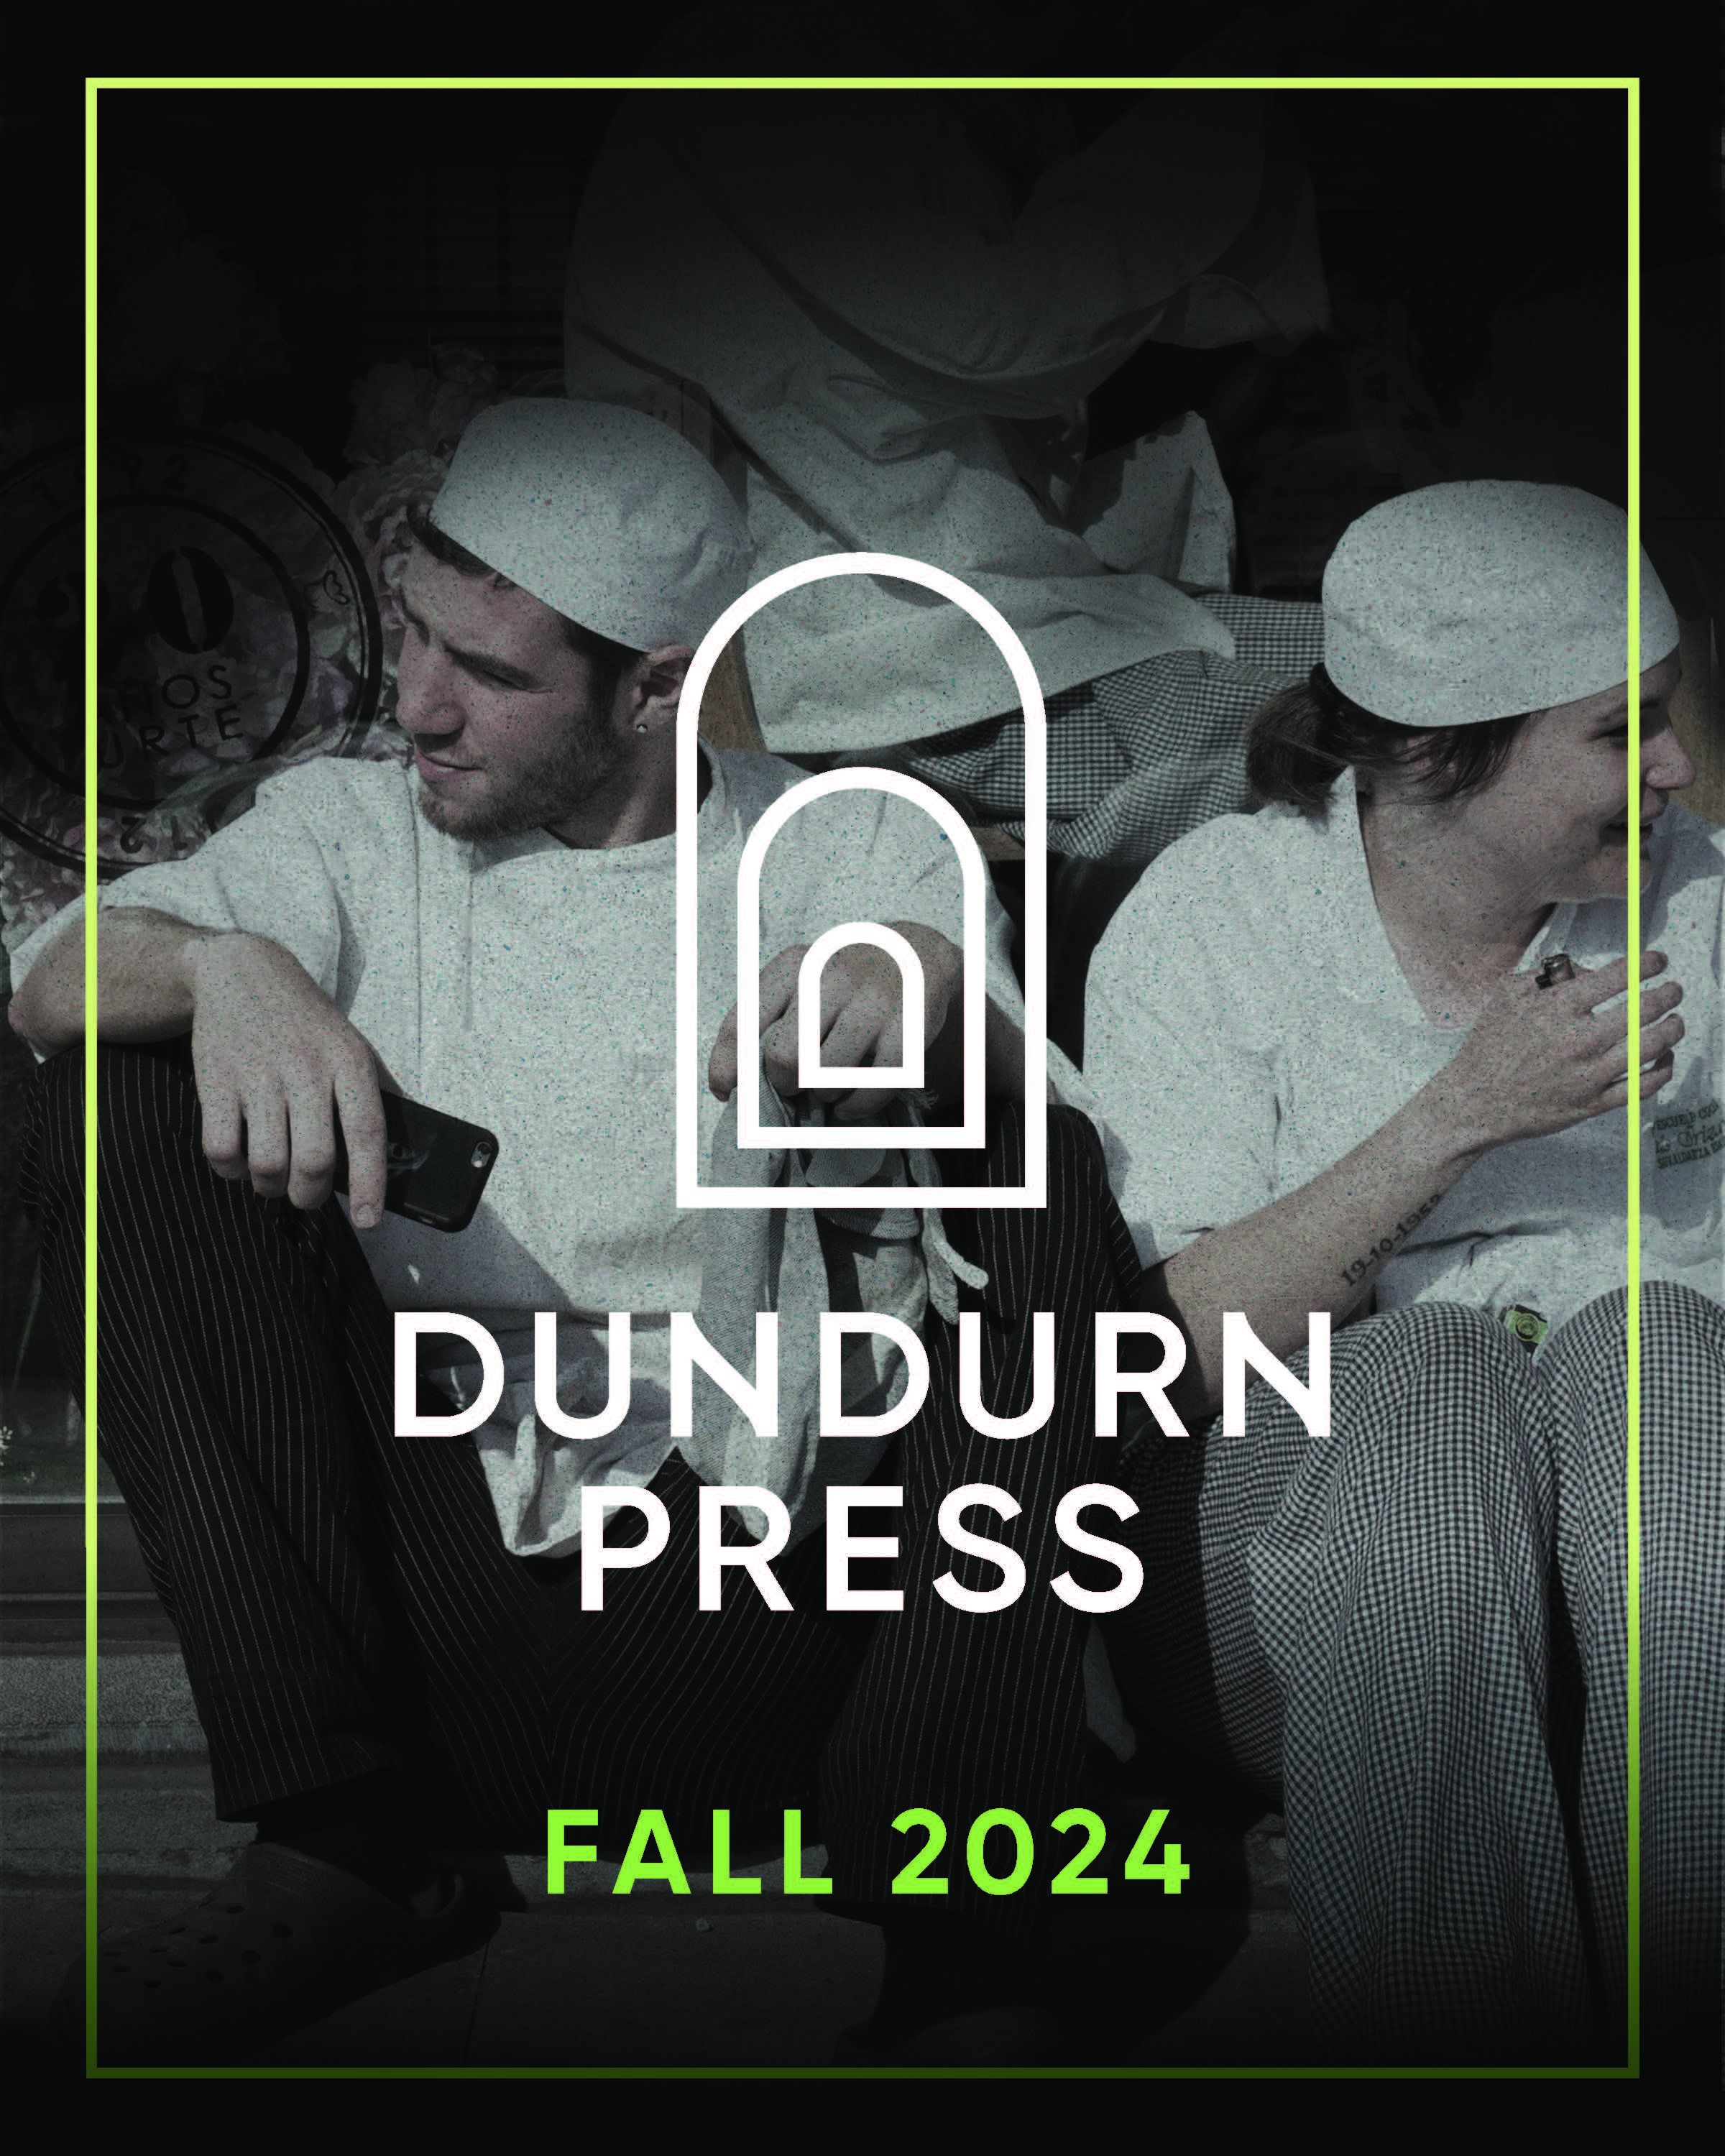 Download the Dundurn Press Fall 2024 Catalogue